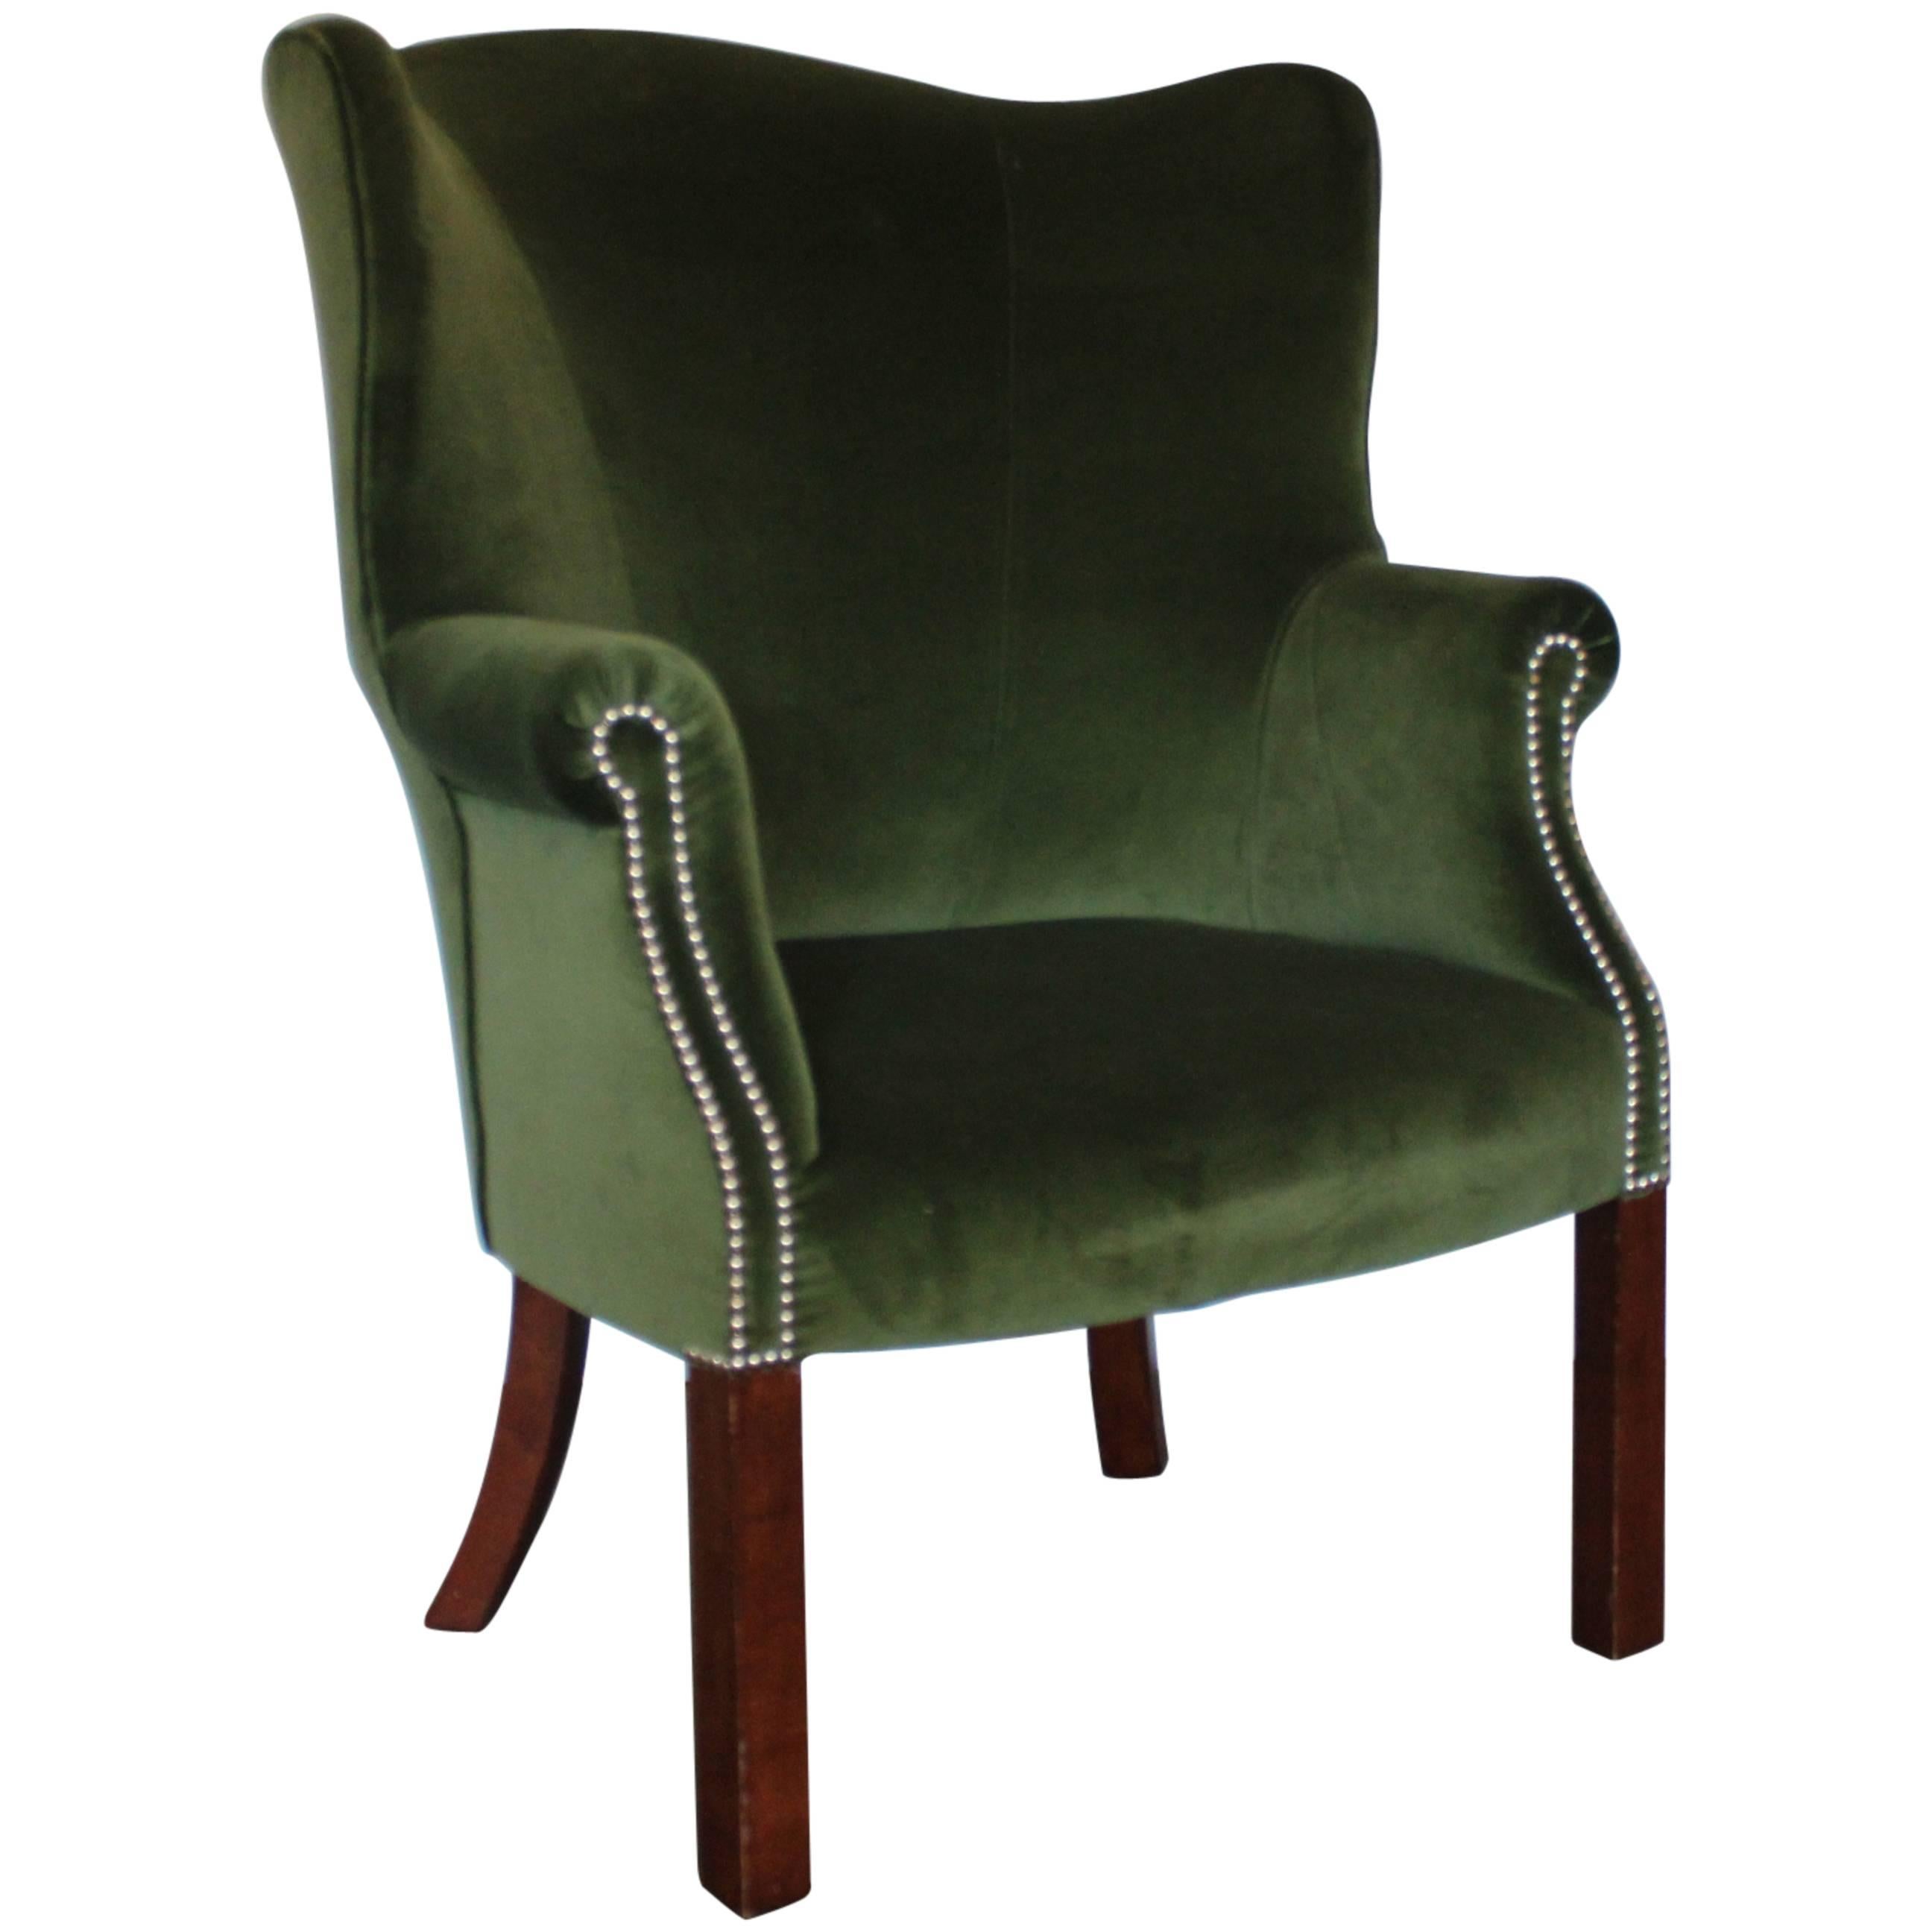 Ralph Lauren Compact “Wingback” Armchair in “English Riding” Green Velvet